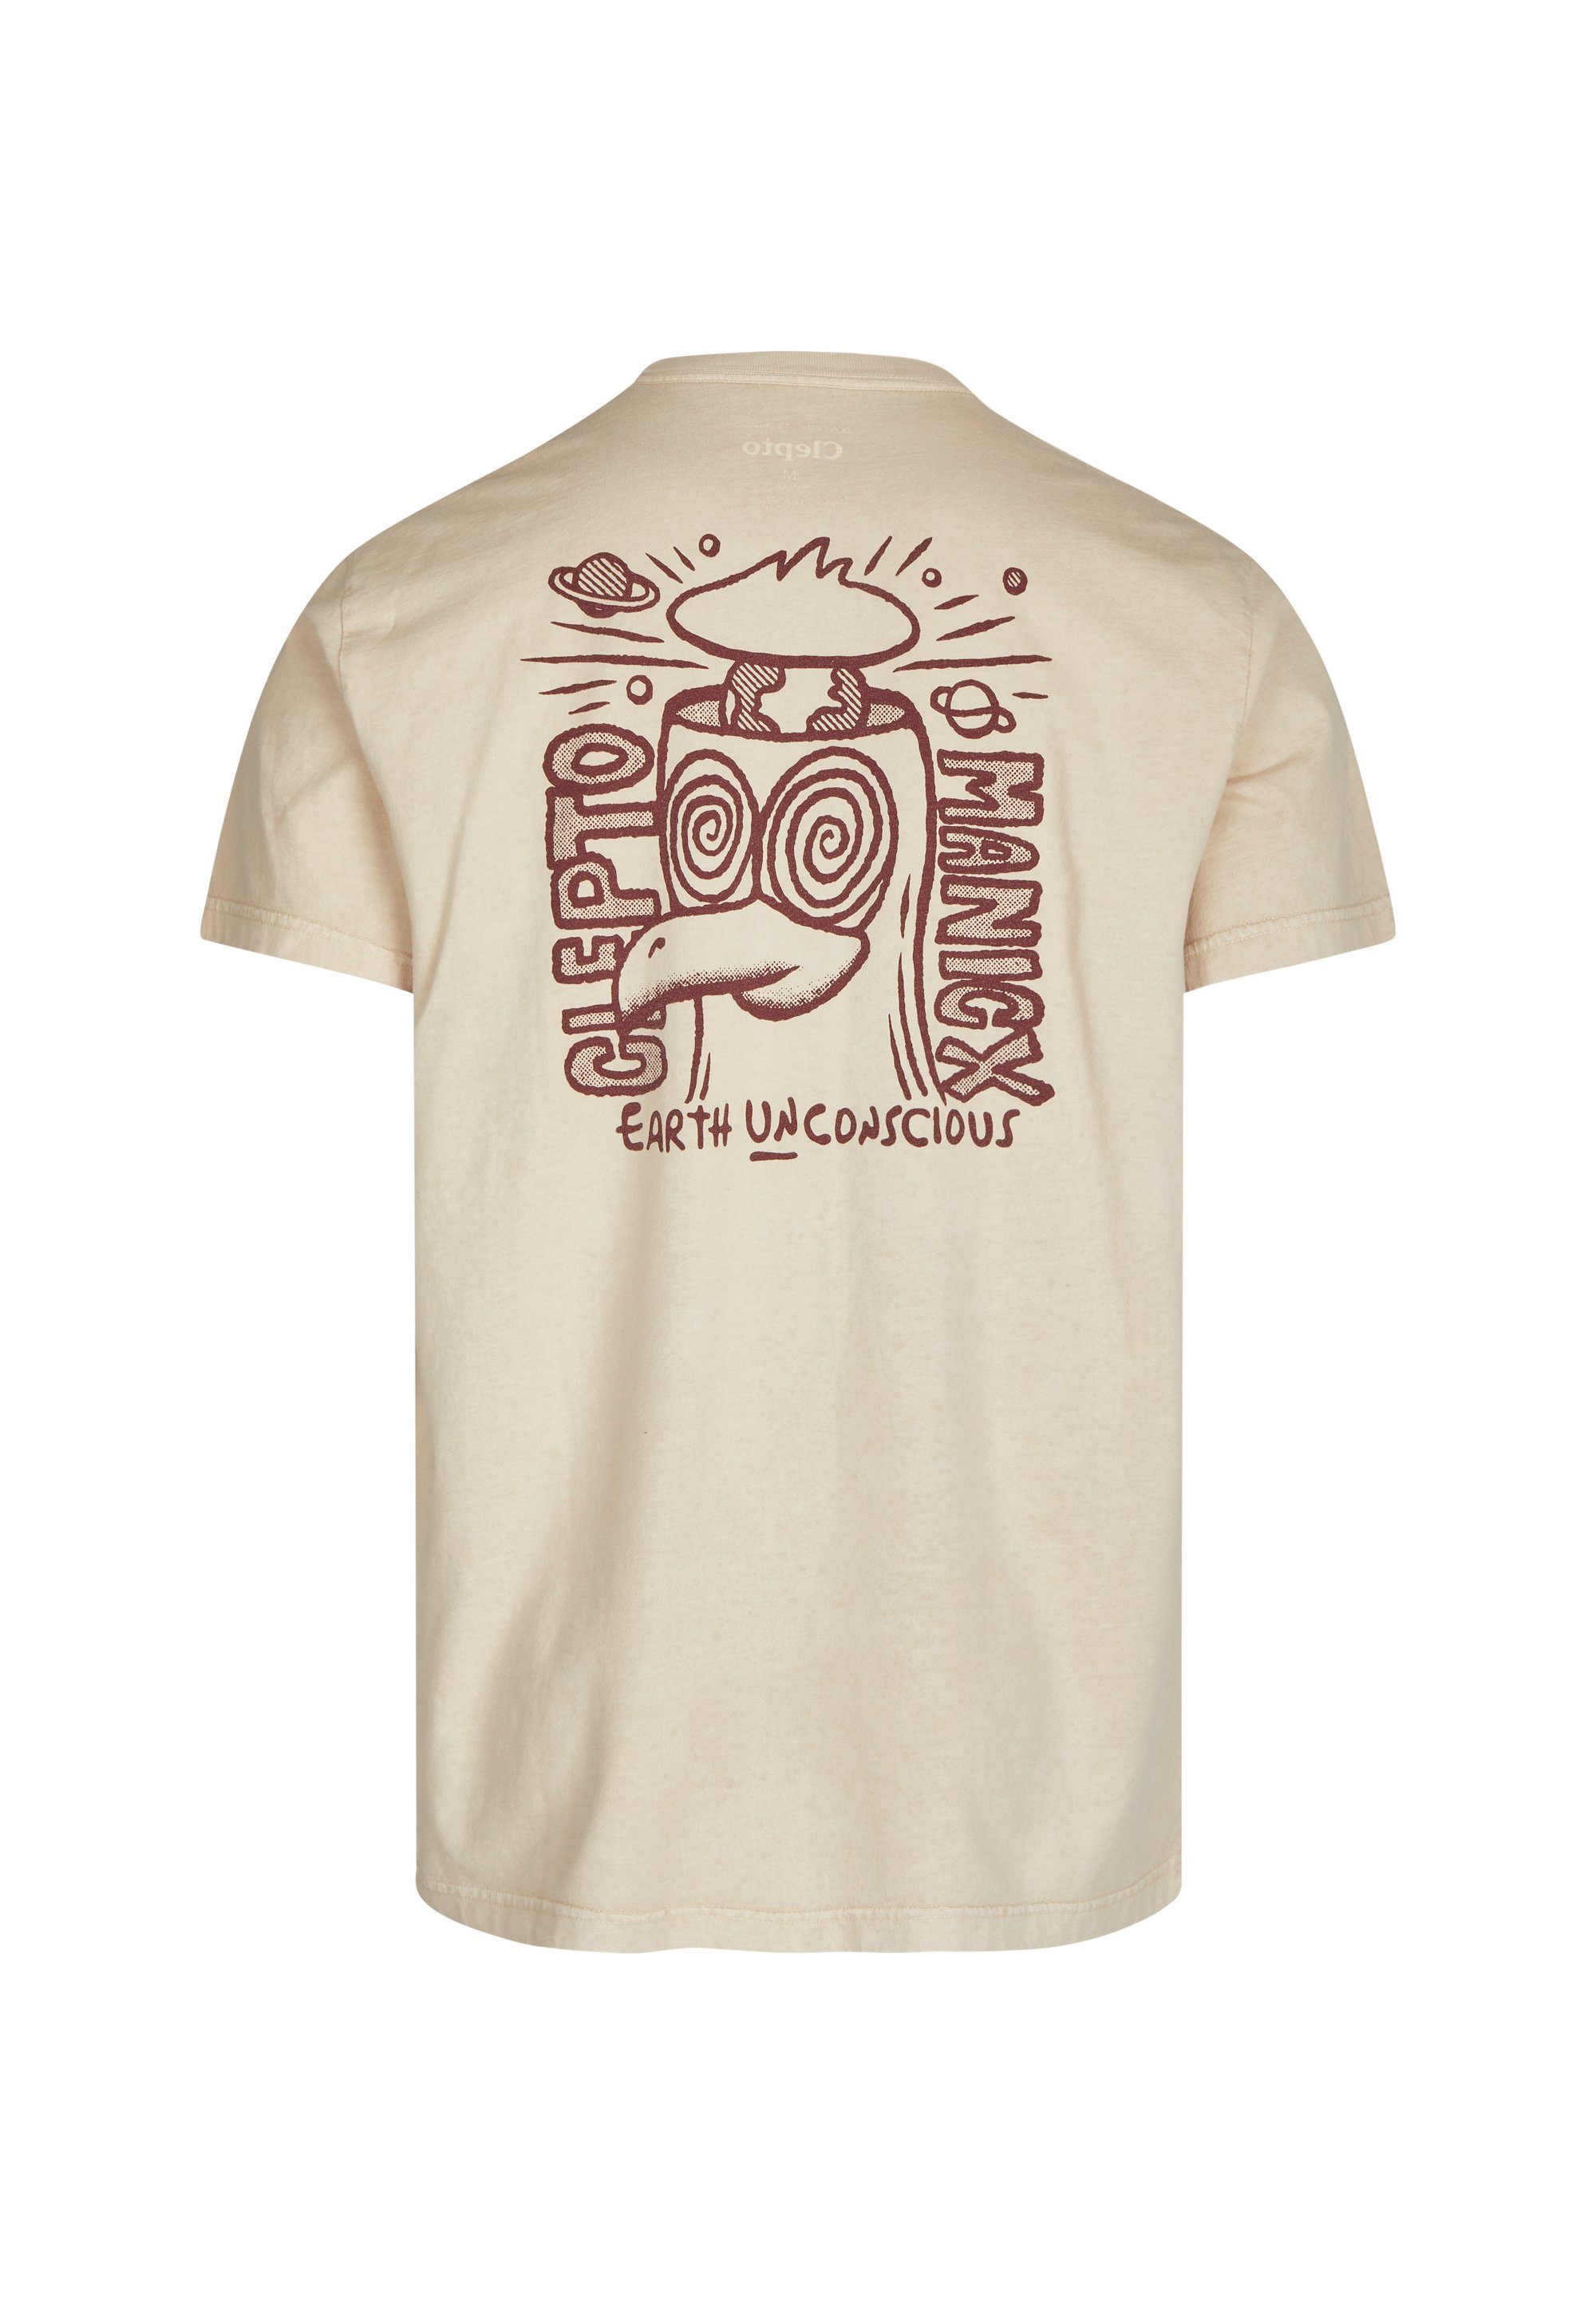 Unconscious coolem T-Shirt Print mit braun Cleptomanicx